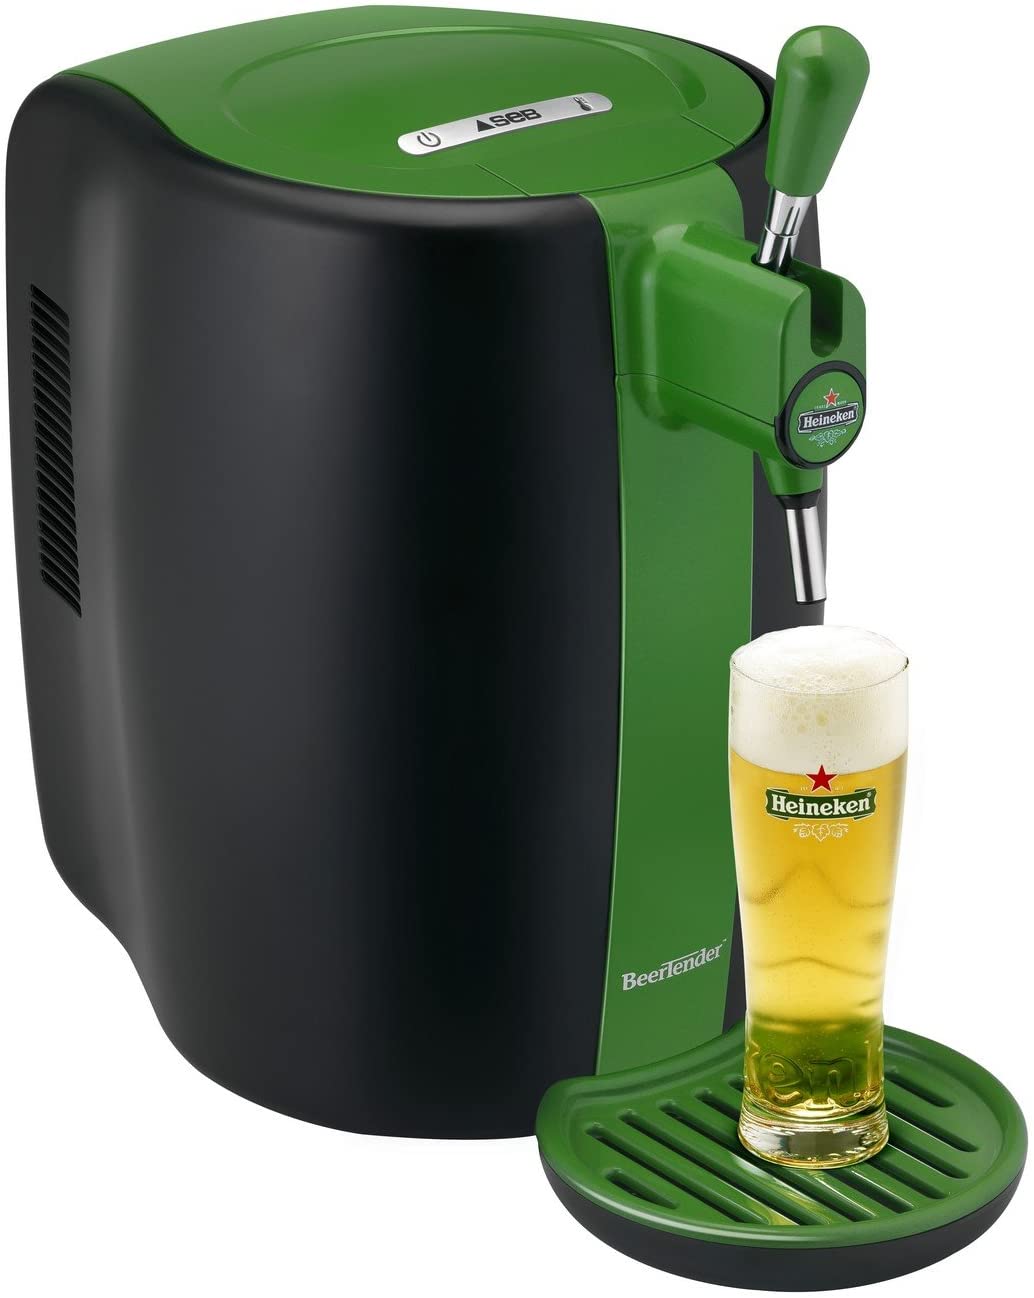 Machine Beer Glass, Green